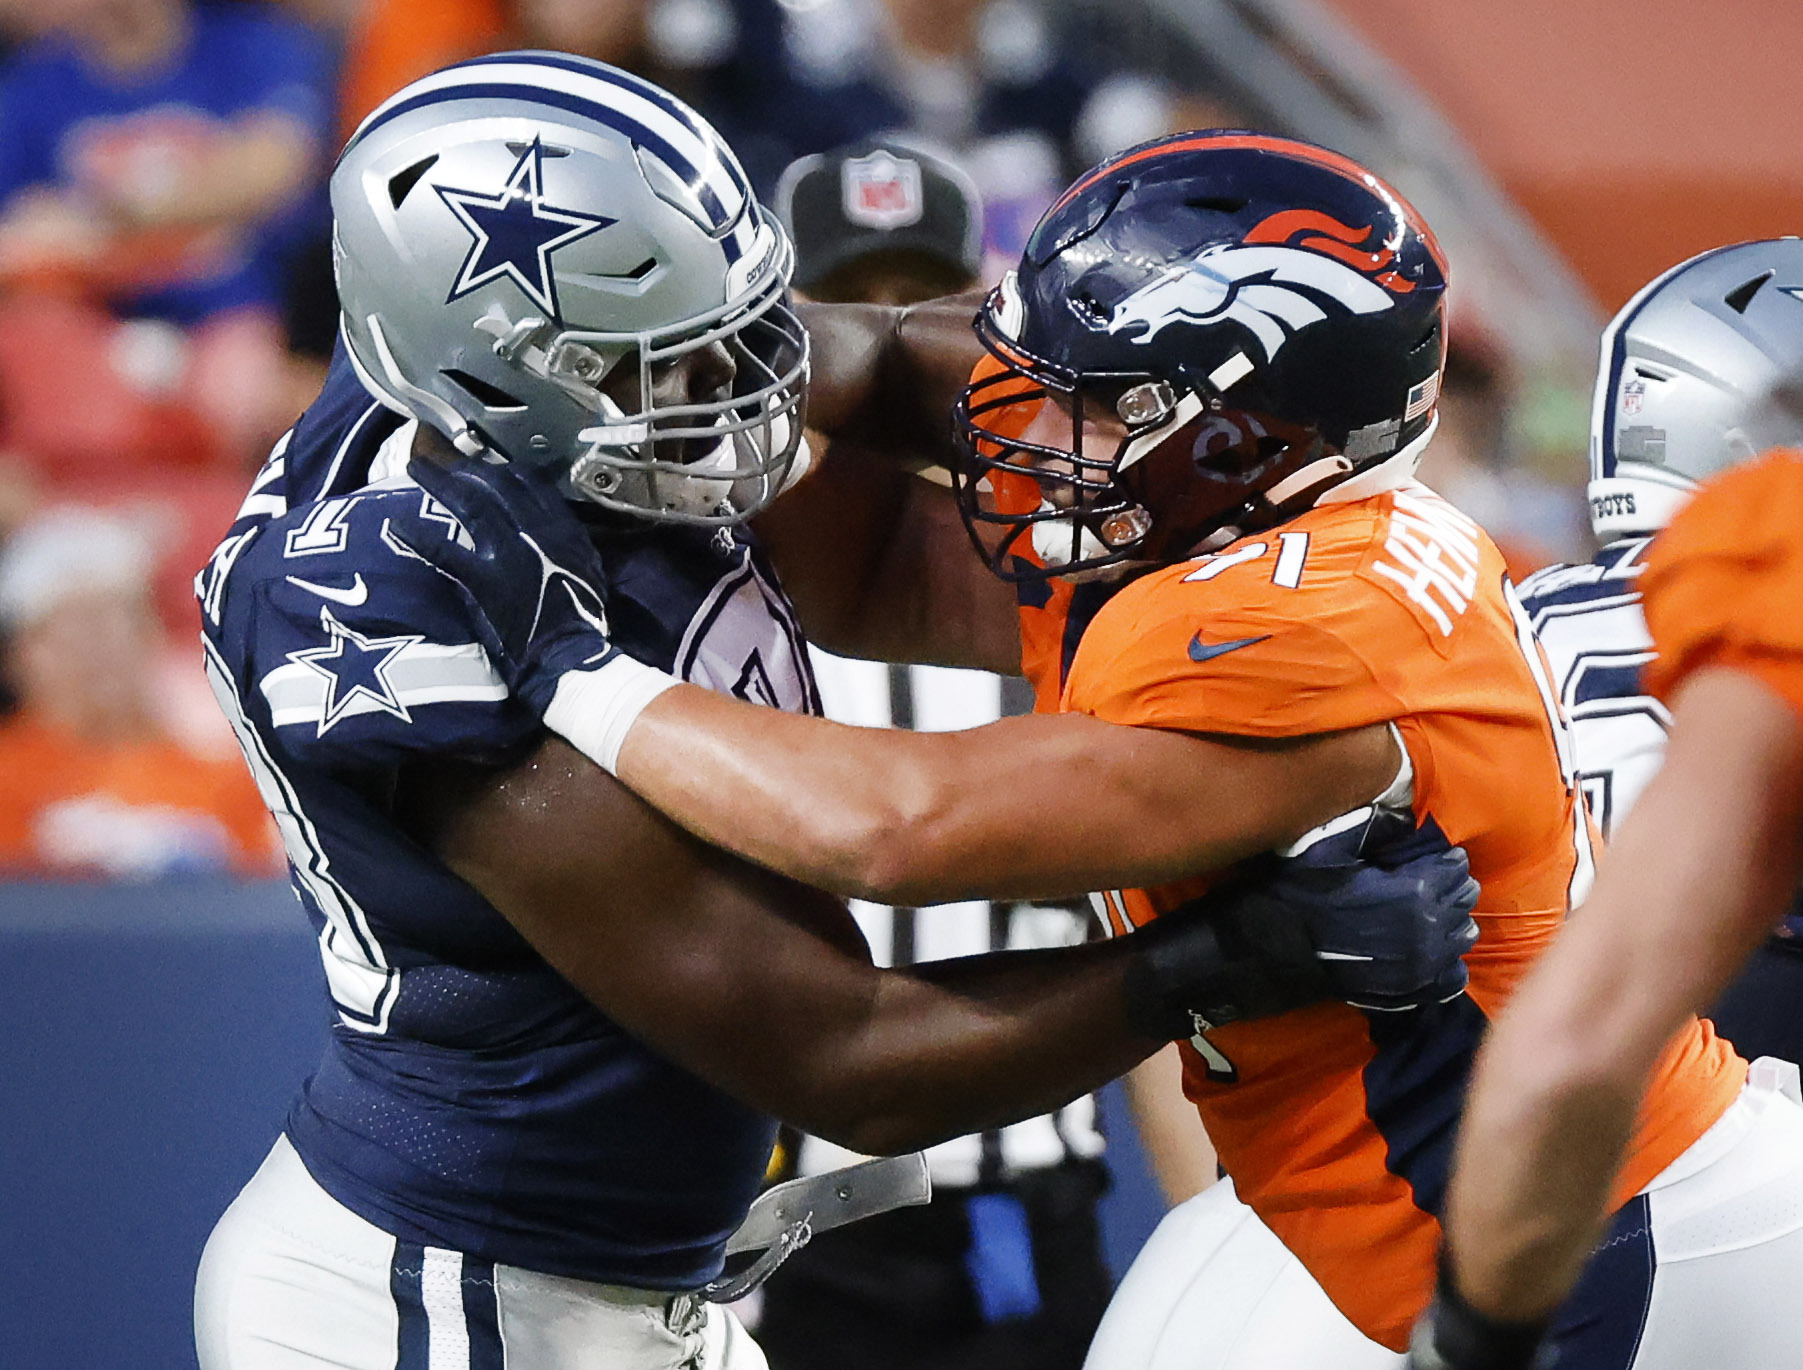 Cowboys' discipline remains in question as penalties plague